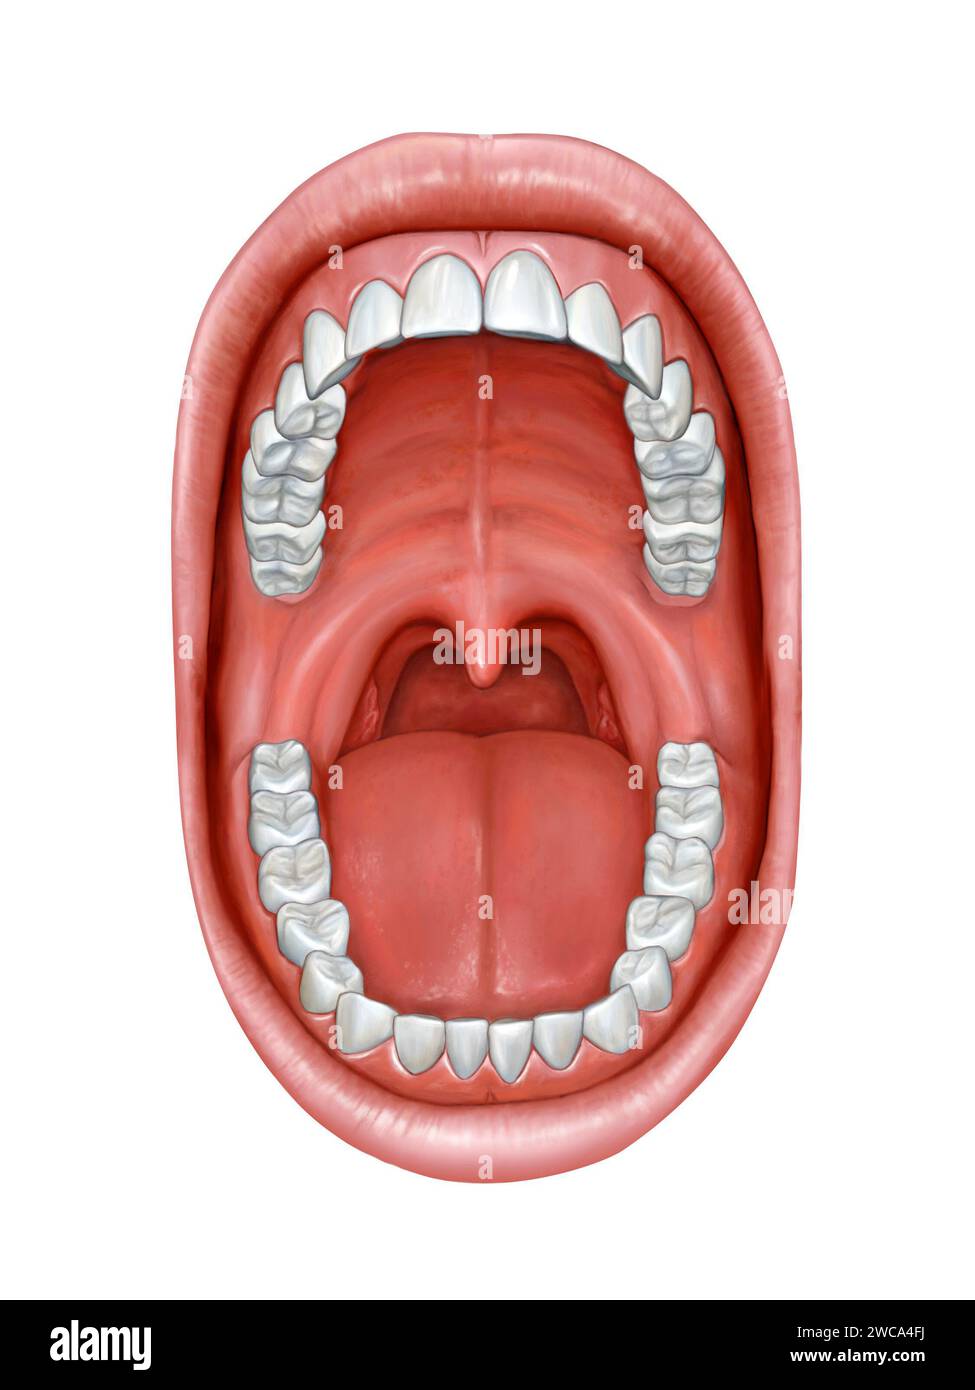 Anatomie des Mundes. Digitale Illustration. Stockfoto